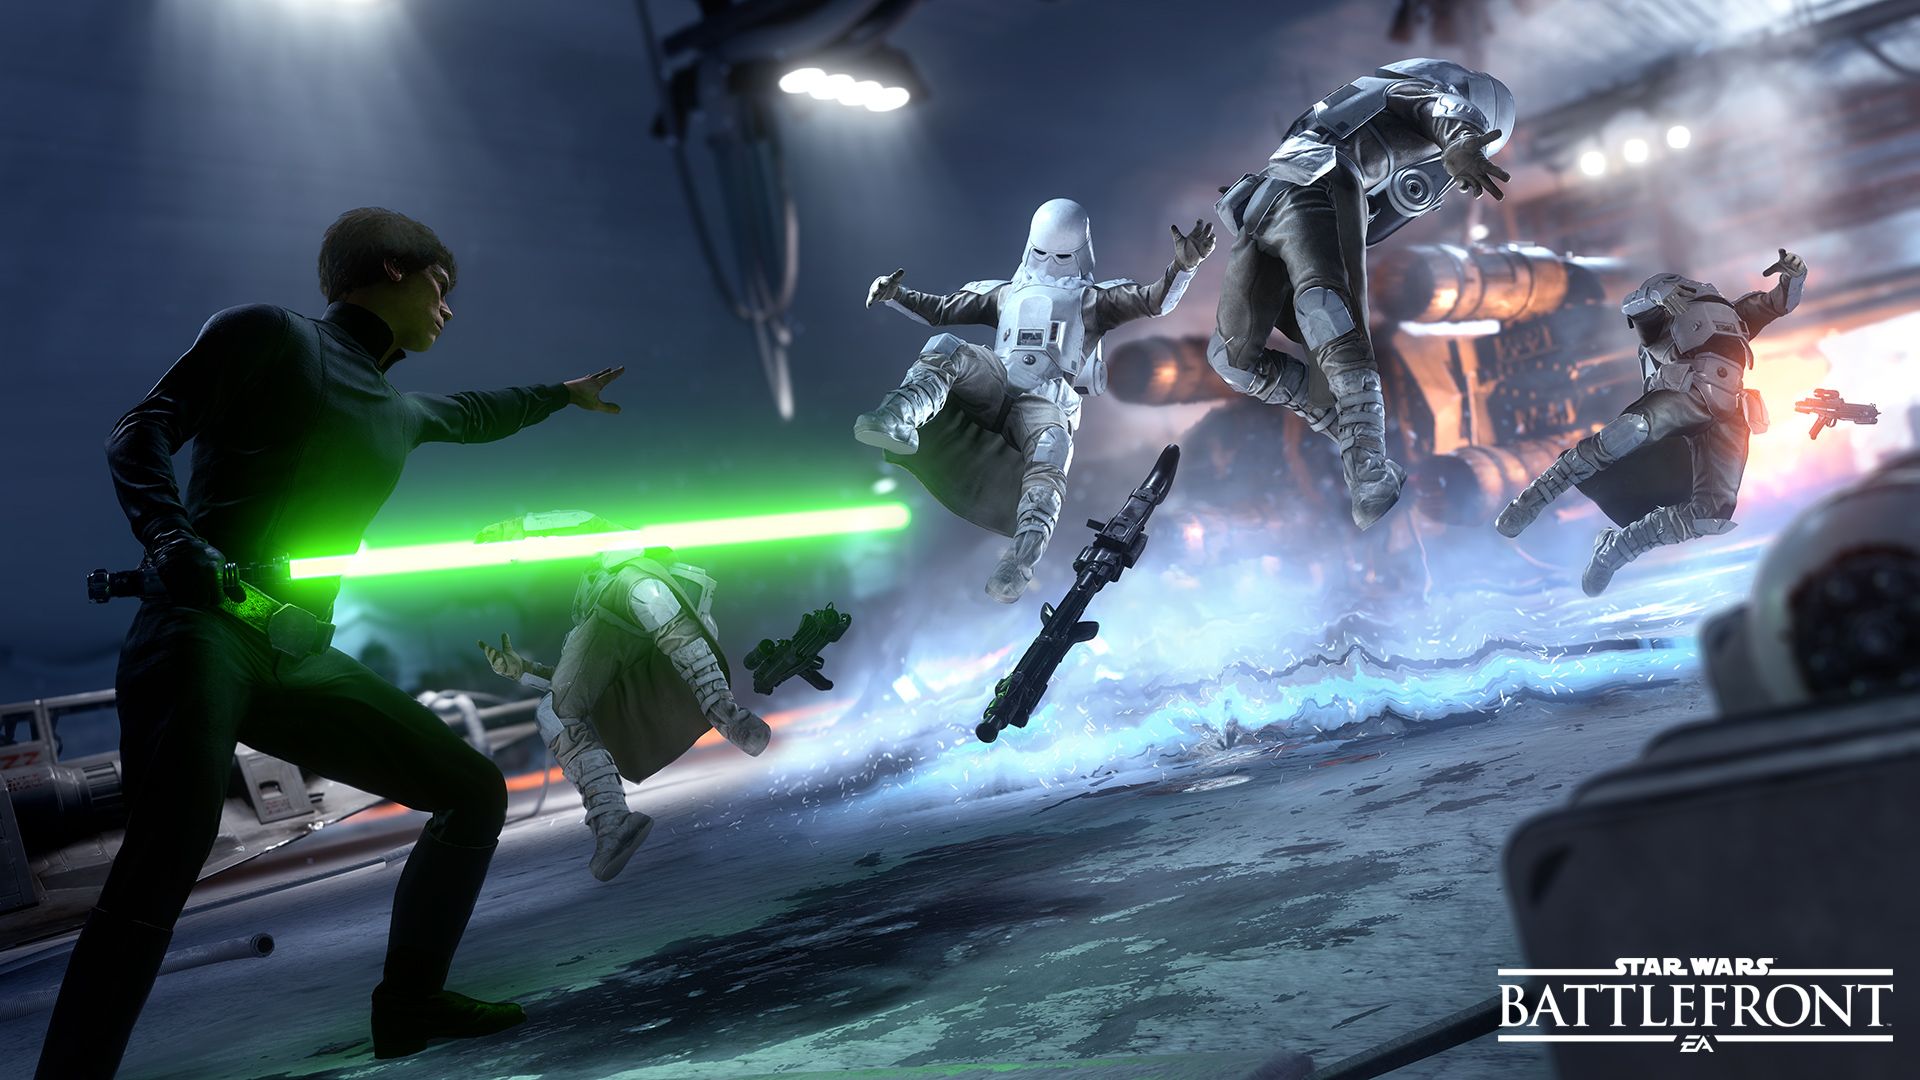 Star Wars: Battlefront - Luke Skywalker Force Push